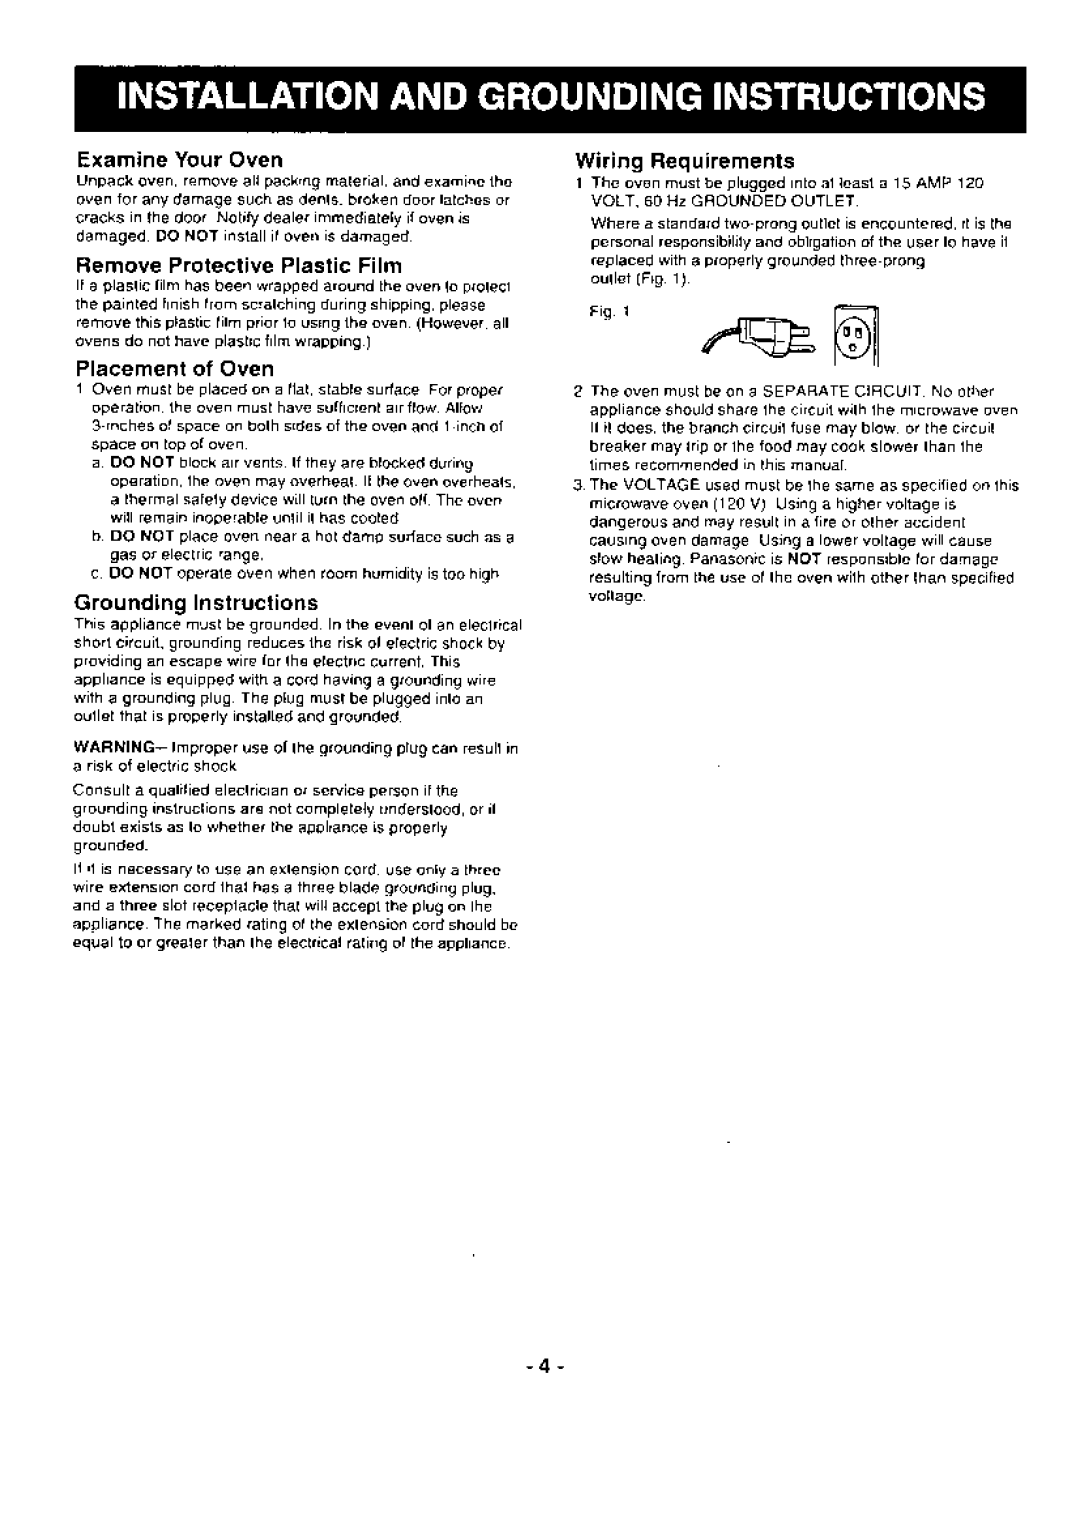 Panasonic NB-1024 manual ExamineYourOven, WiringRequirements, Remove ProtectivePlastic Film, Placementof Oven 